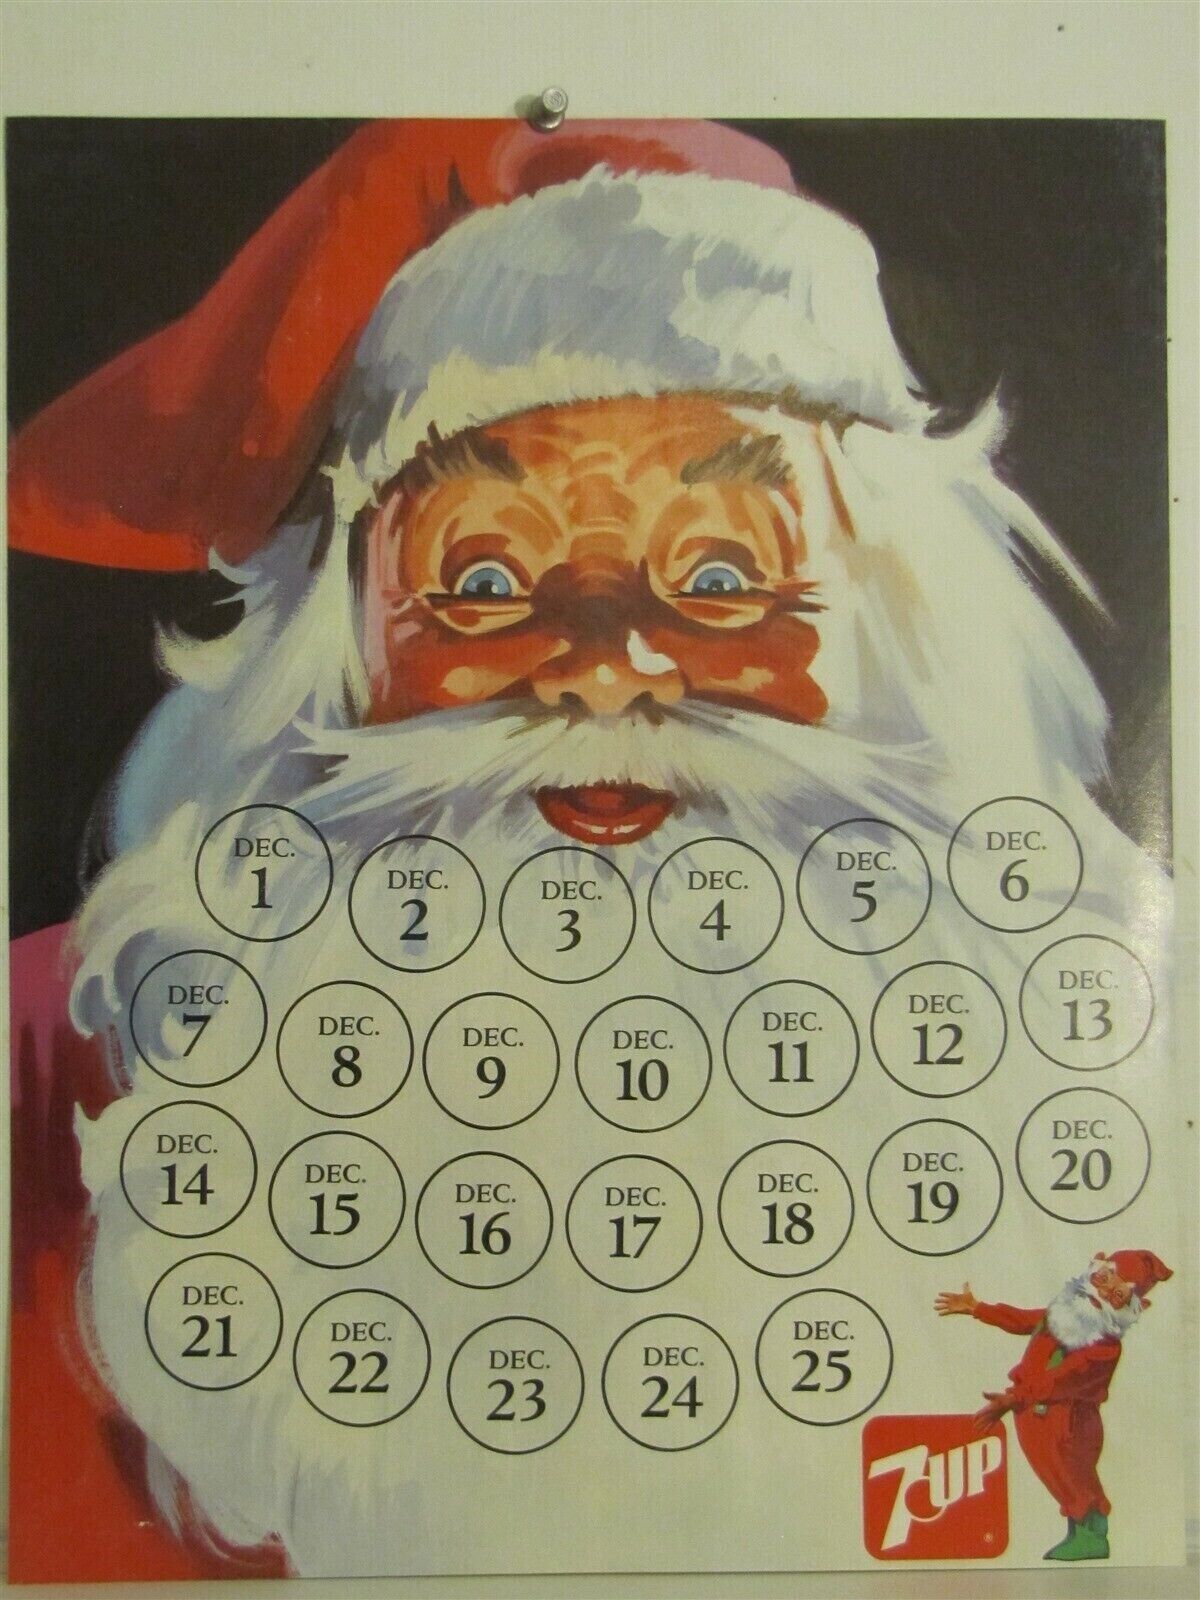 7up December Calendar Page 12\